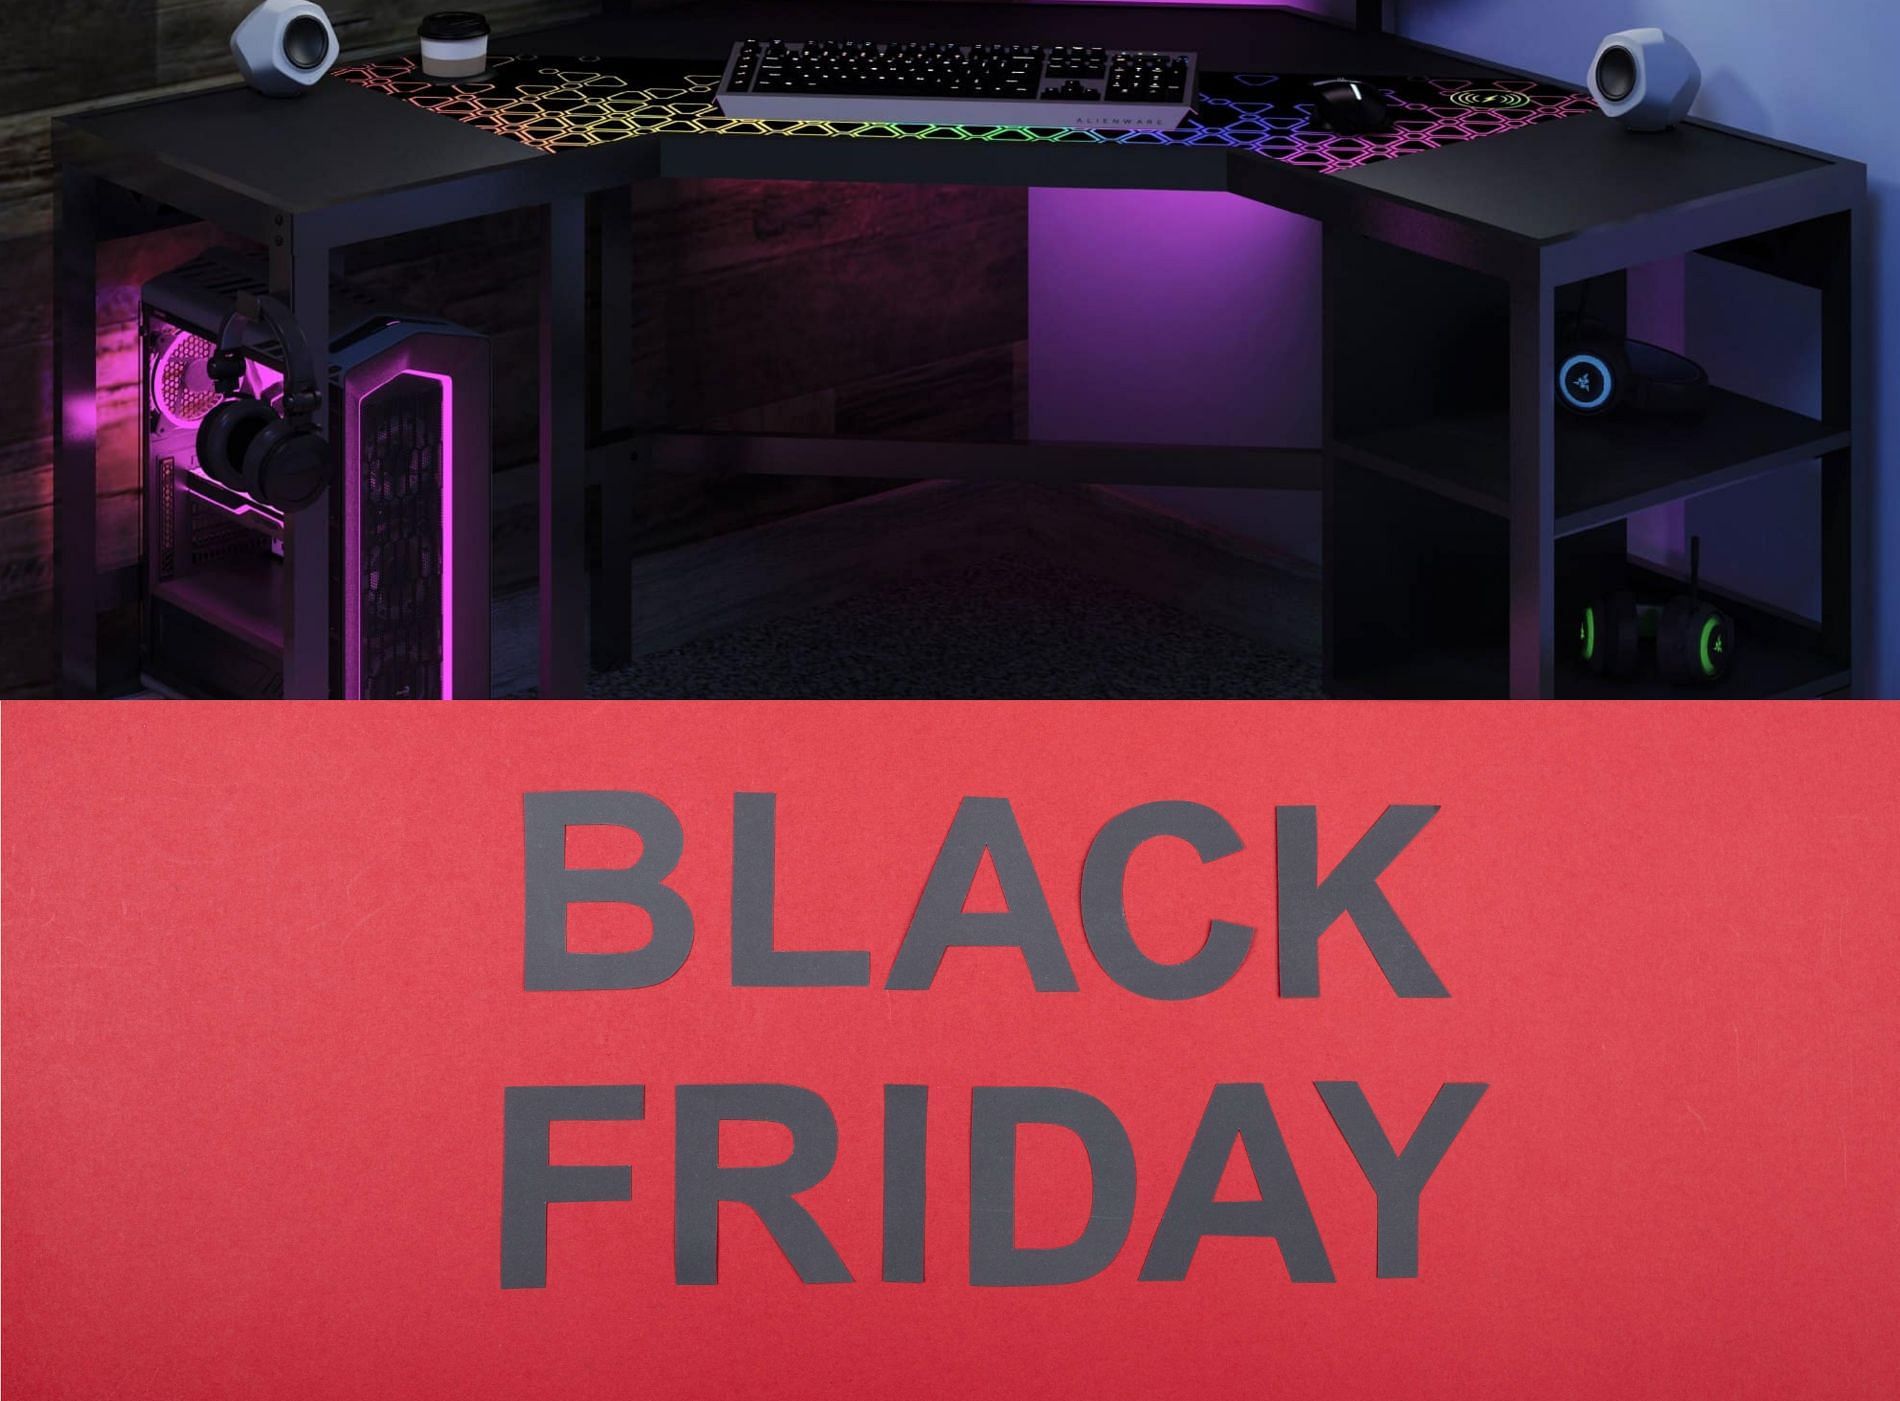 Black Friday Sale for Gaming Desks (Image by Whalen Furniture, Newegg)